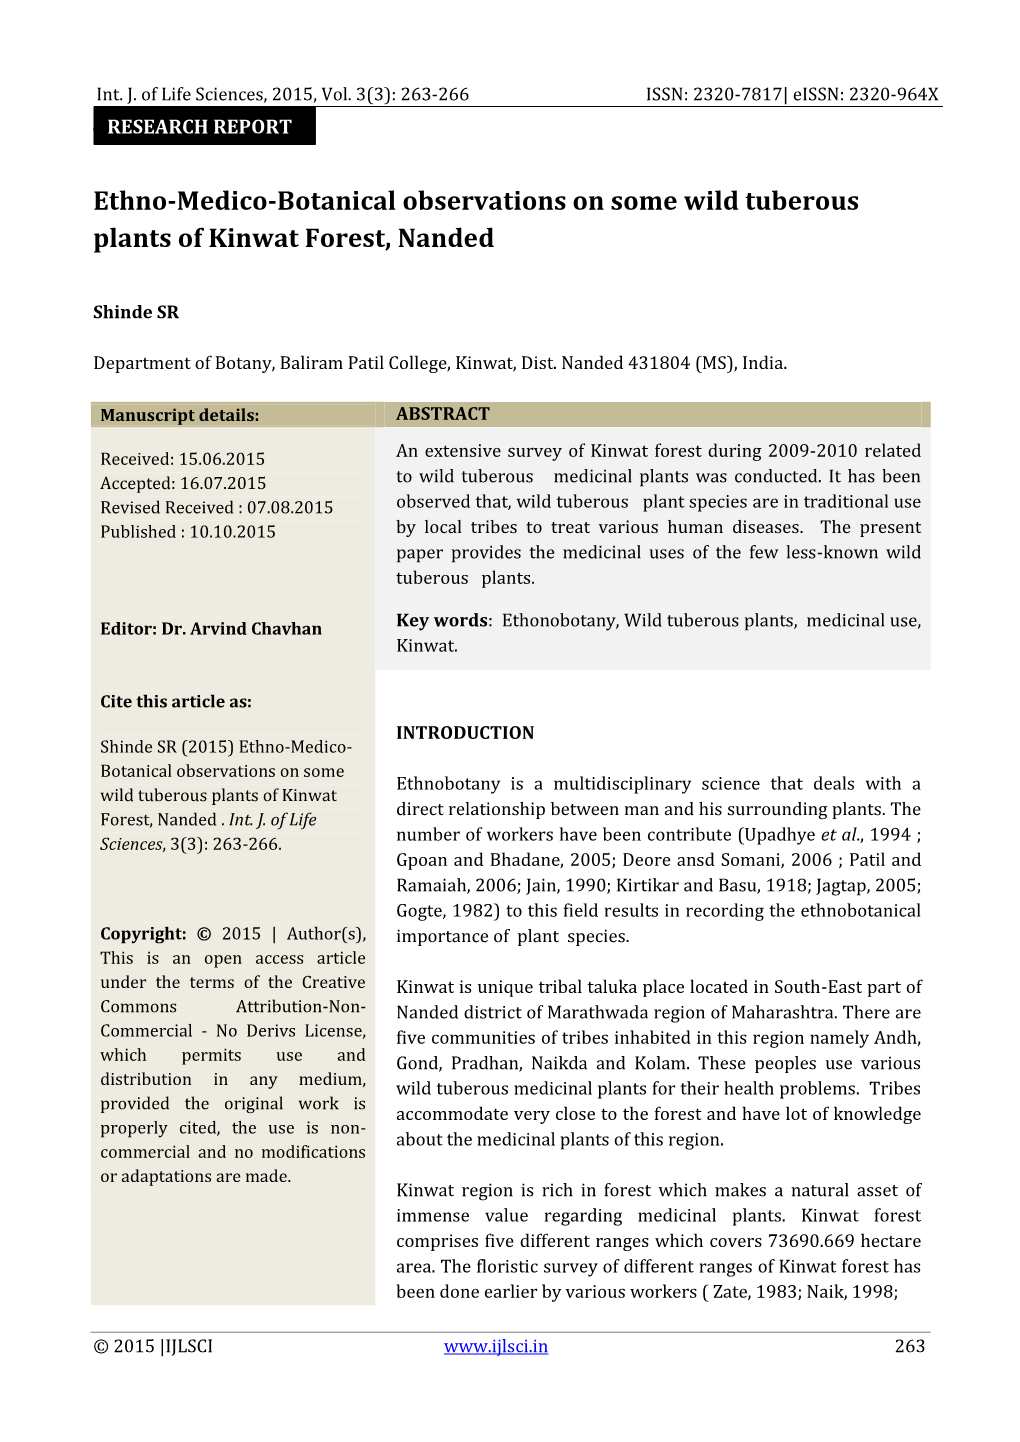 Ethno-Medico-Botanical Observations on Some Wild Tuberous Plants of Kinwat Forest, Nanded